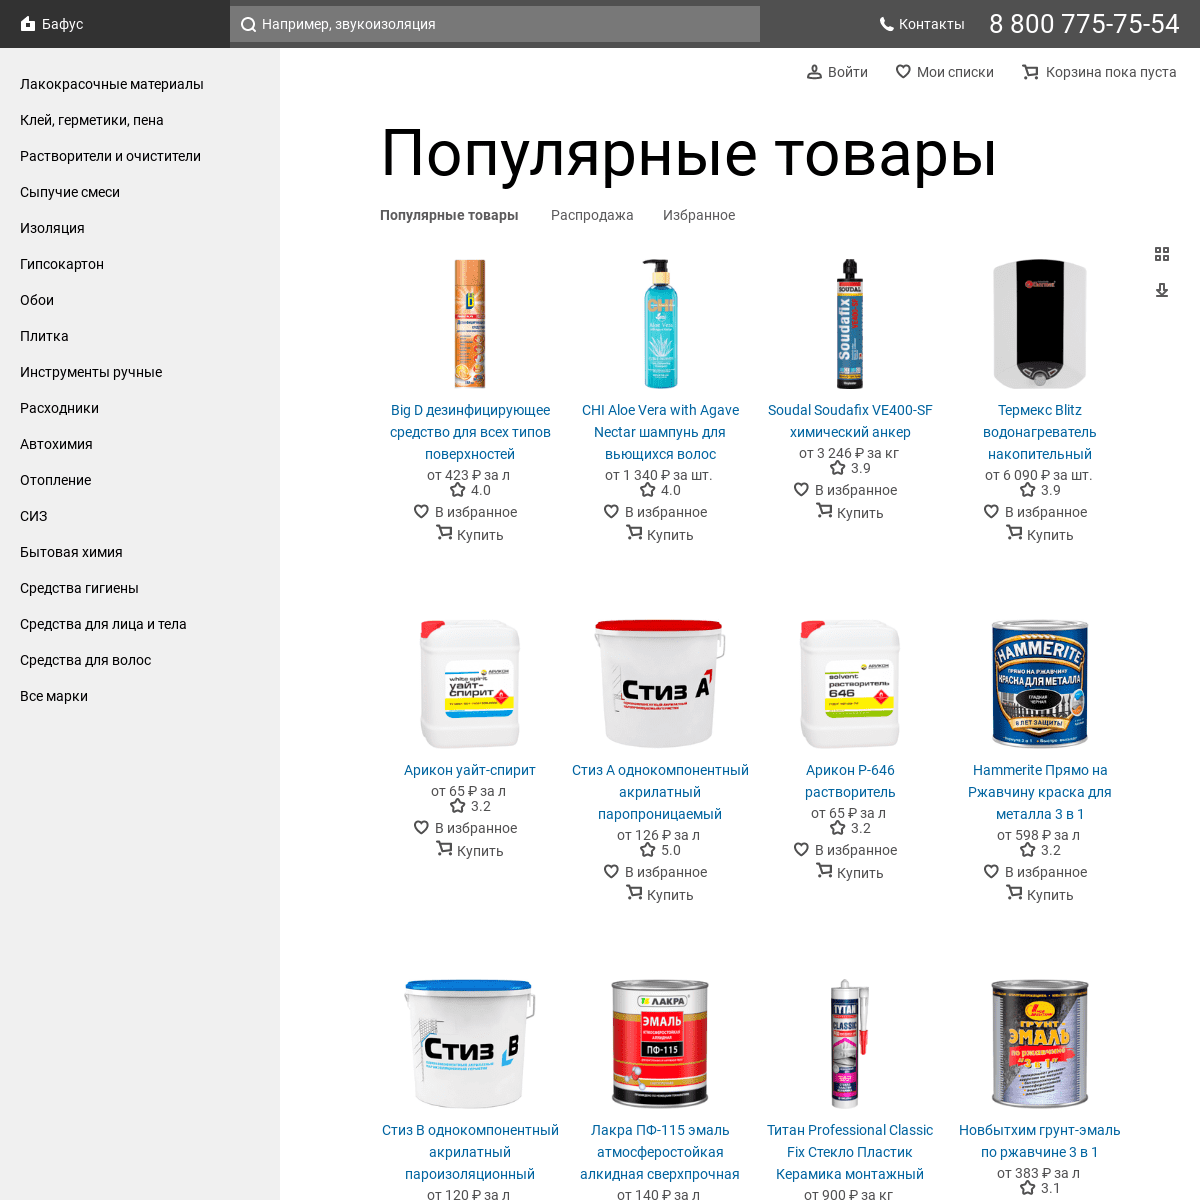 A complete backup of https://bafus.ru